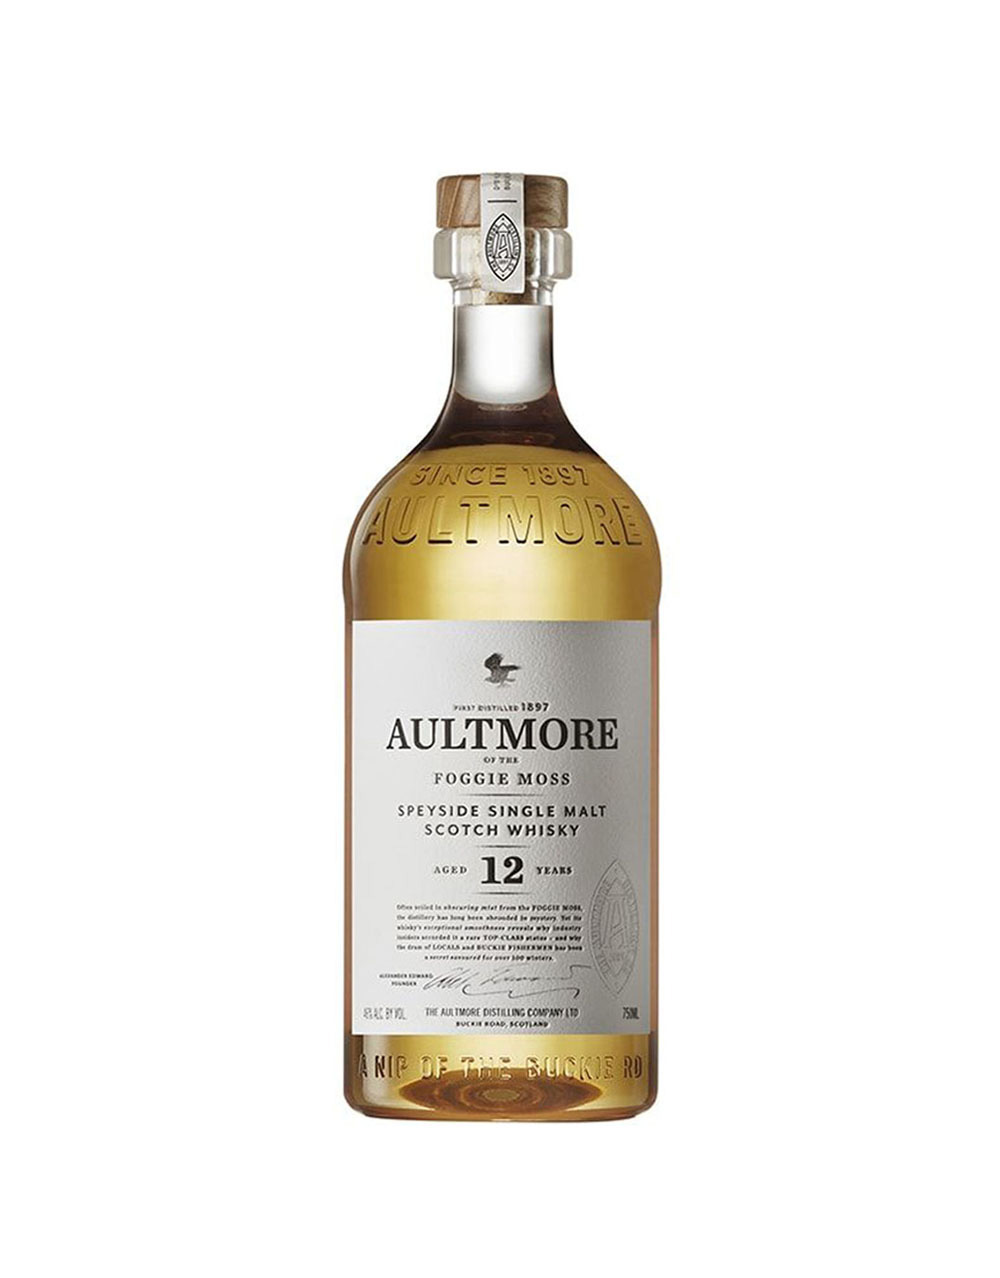 Glenmorangie Nectar D'Or Single Malt Scotch Whisky